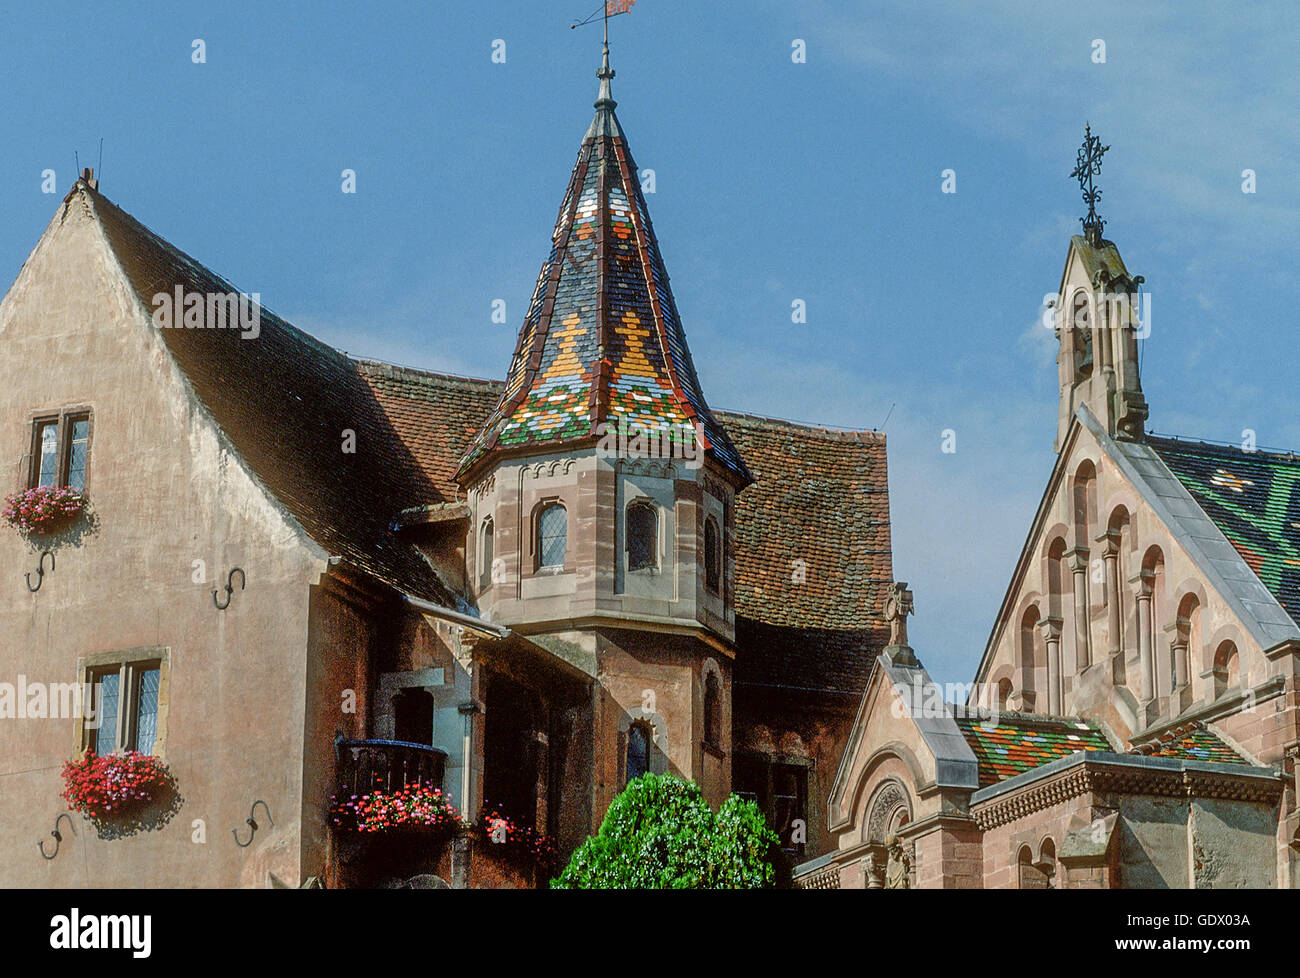 Case storiche in Eguisheim, Francia Foto Stock